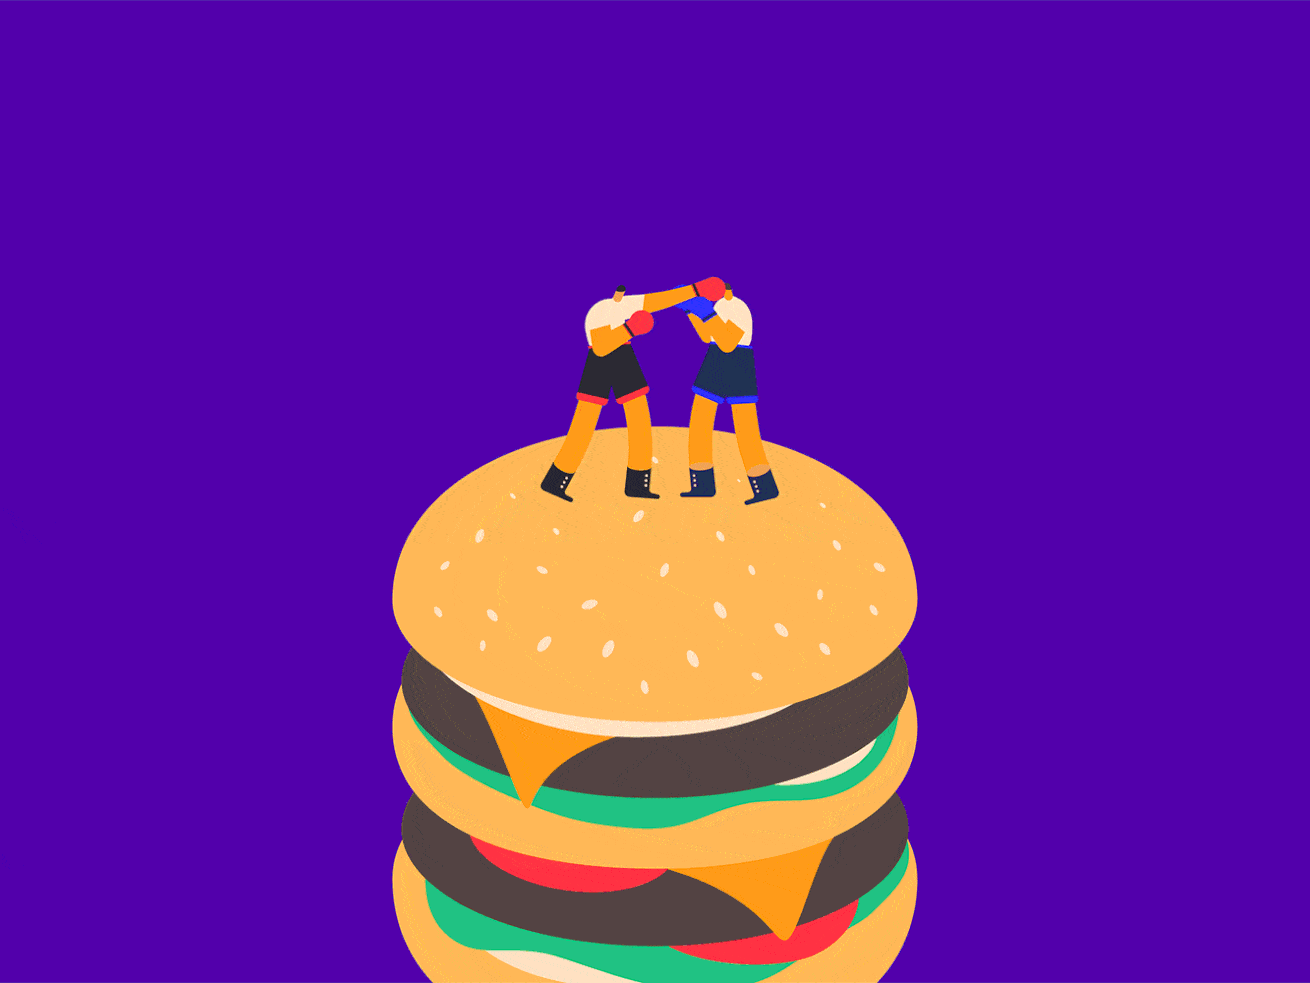 The burger brawl